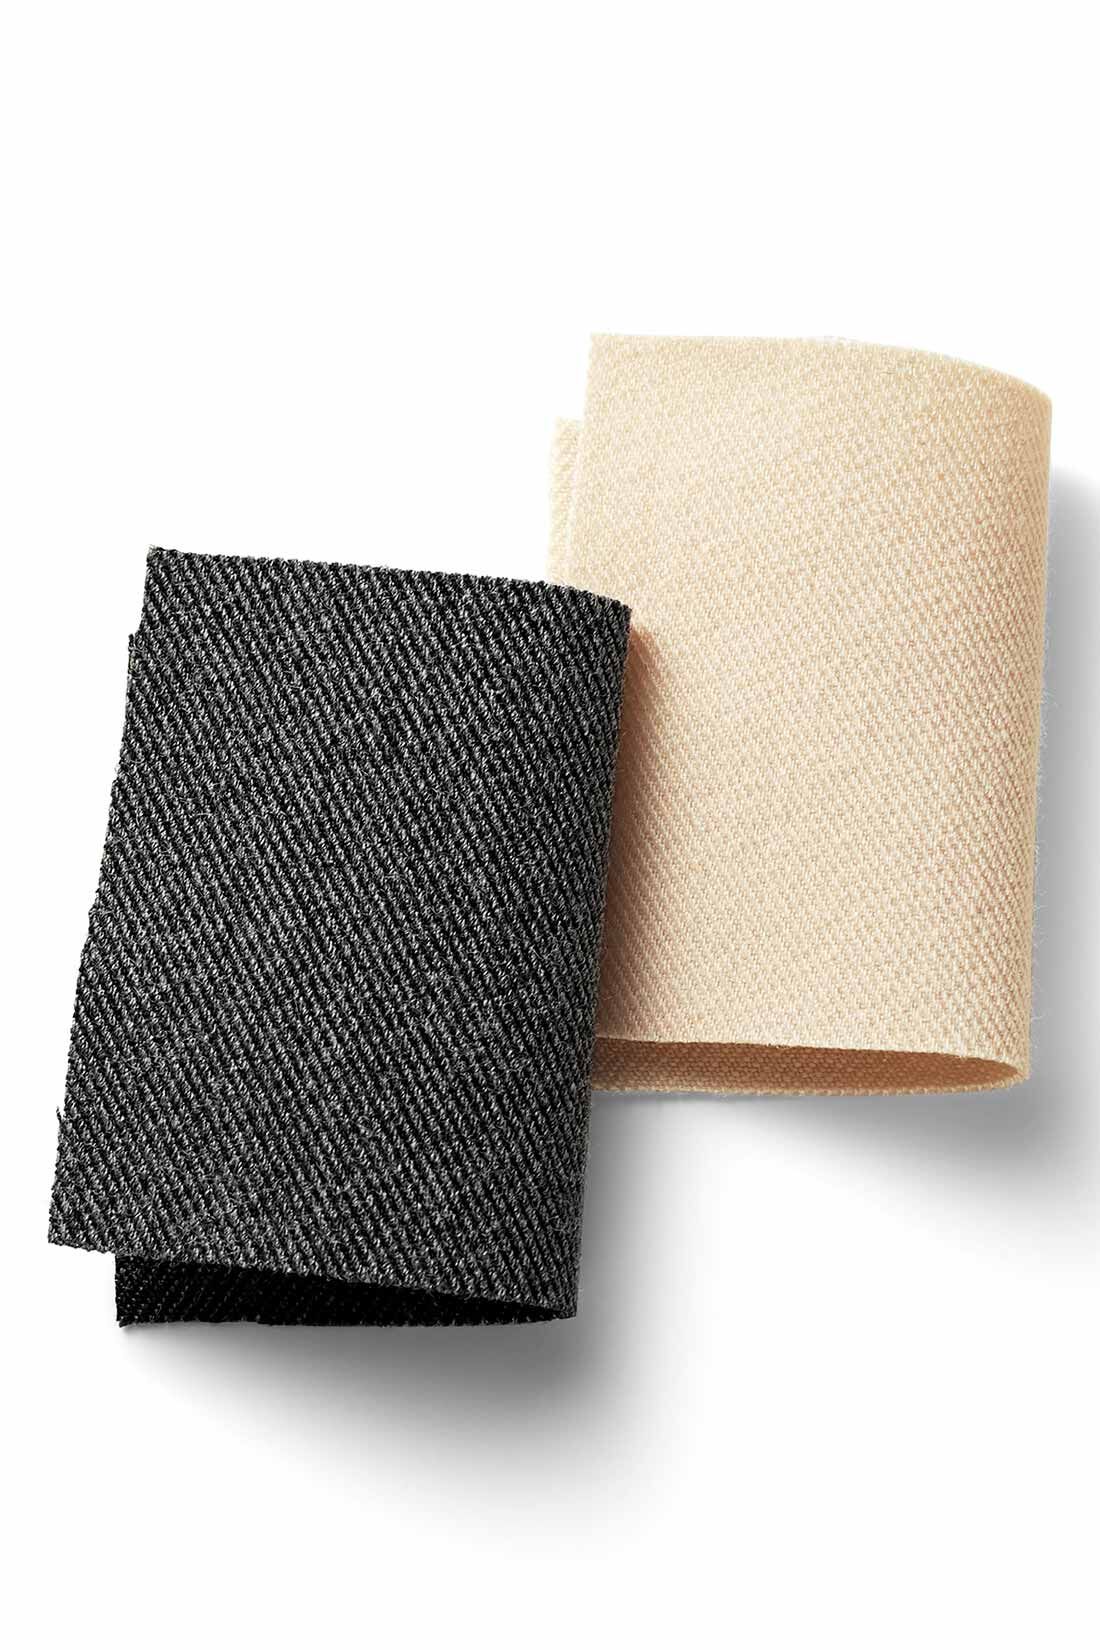 MEDE19F|MEDE19F　すそリブバルーンパンツ〈アイボリー〉|落ち感のある綾織りストレッチ素材。スーツライクな見た目によらず、快適なはき心地です。